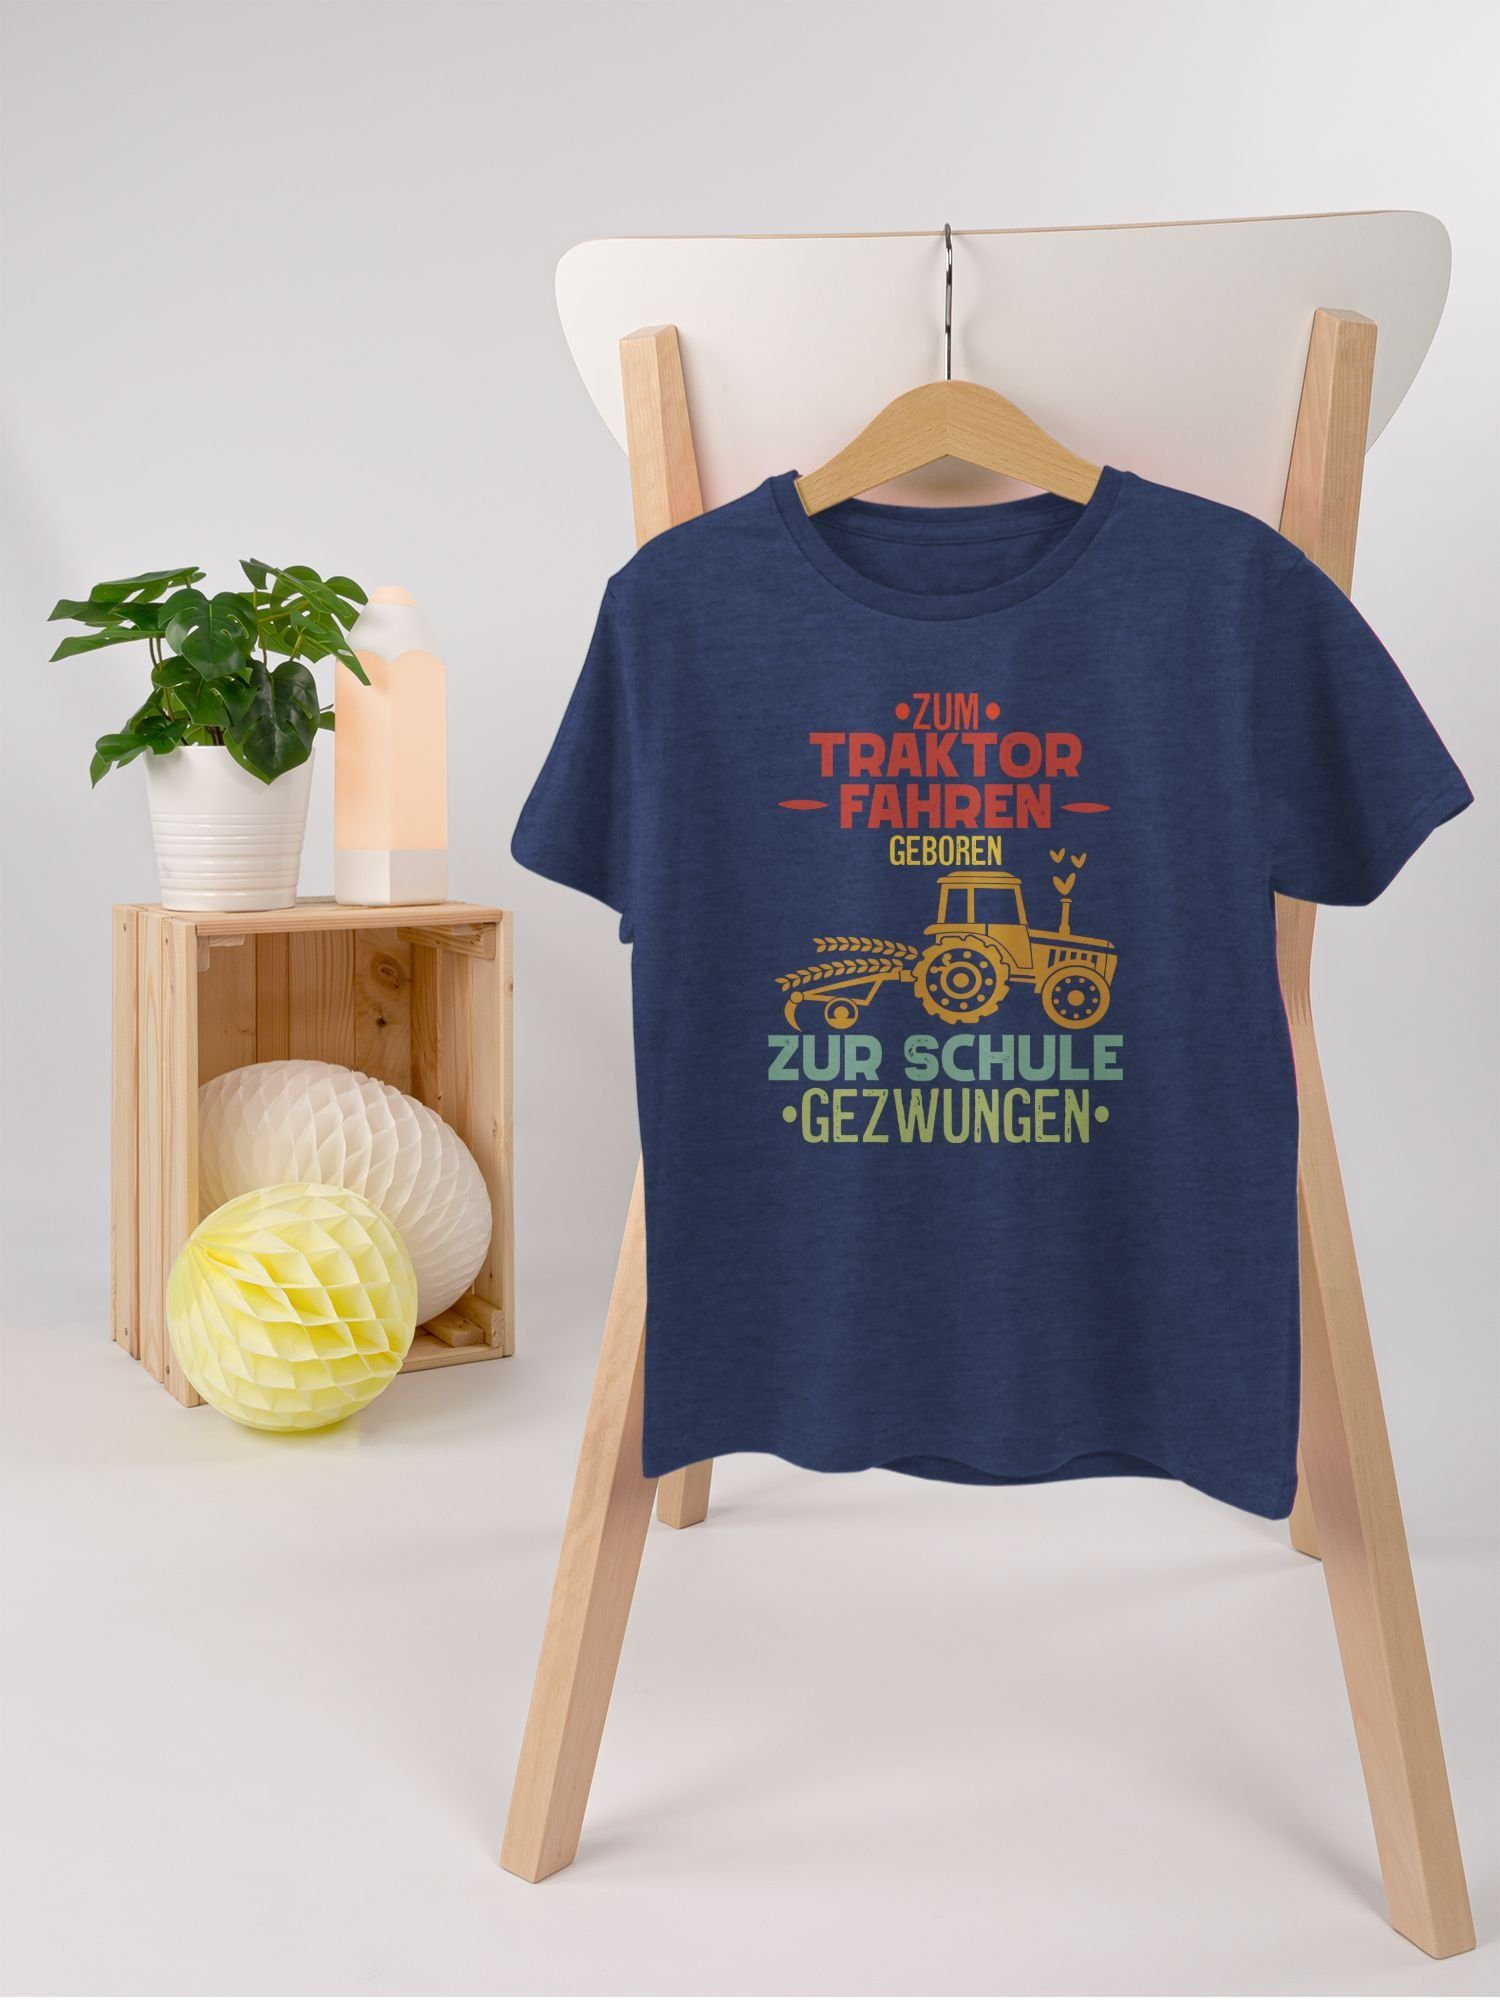 Geschenke 03 Schulanfang Junge Einschulung Zum Meliert Schule Vintage zur T-Shirt Dunkelblau Shirtracer geboren gezwungen fahren Traktor